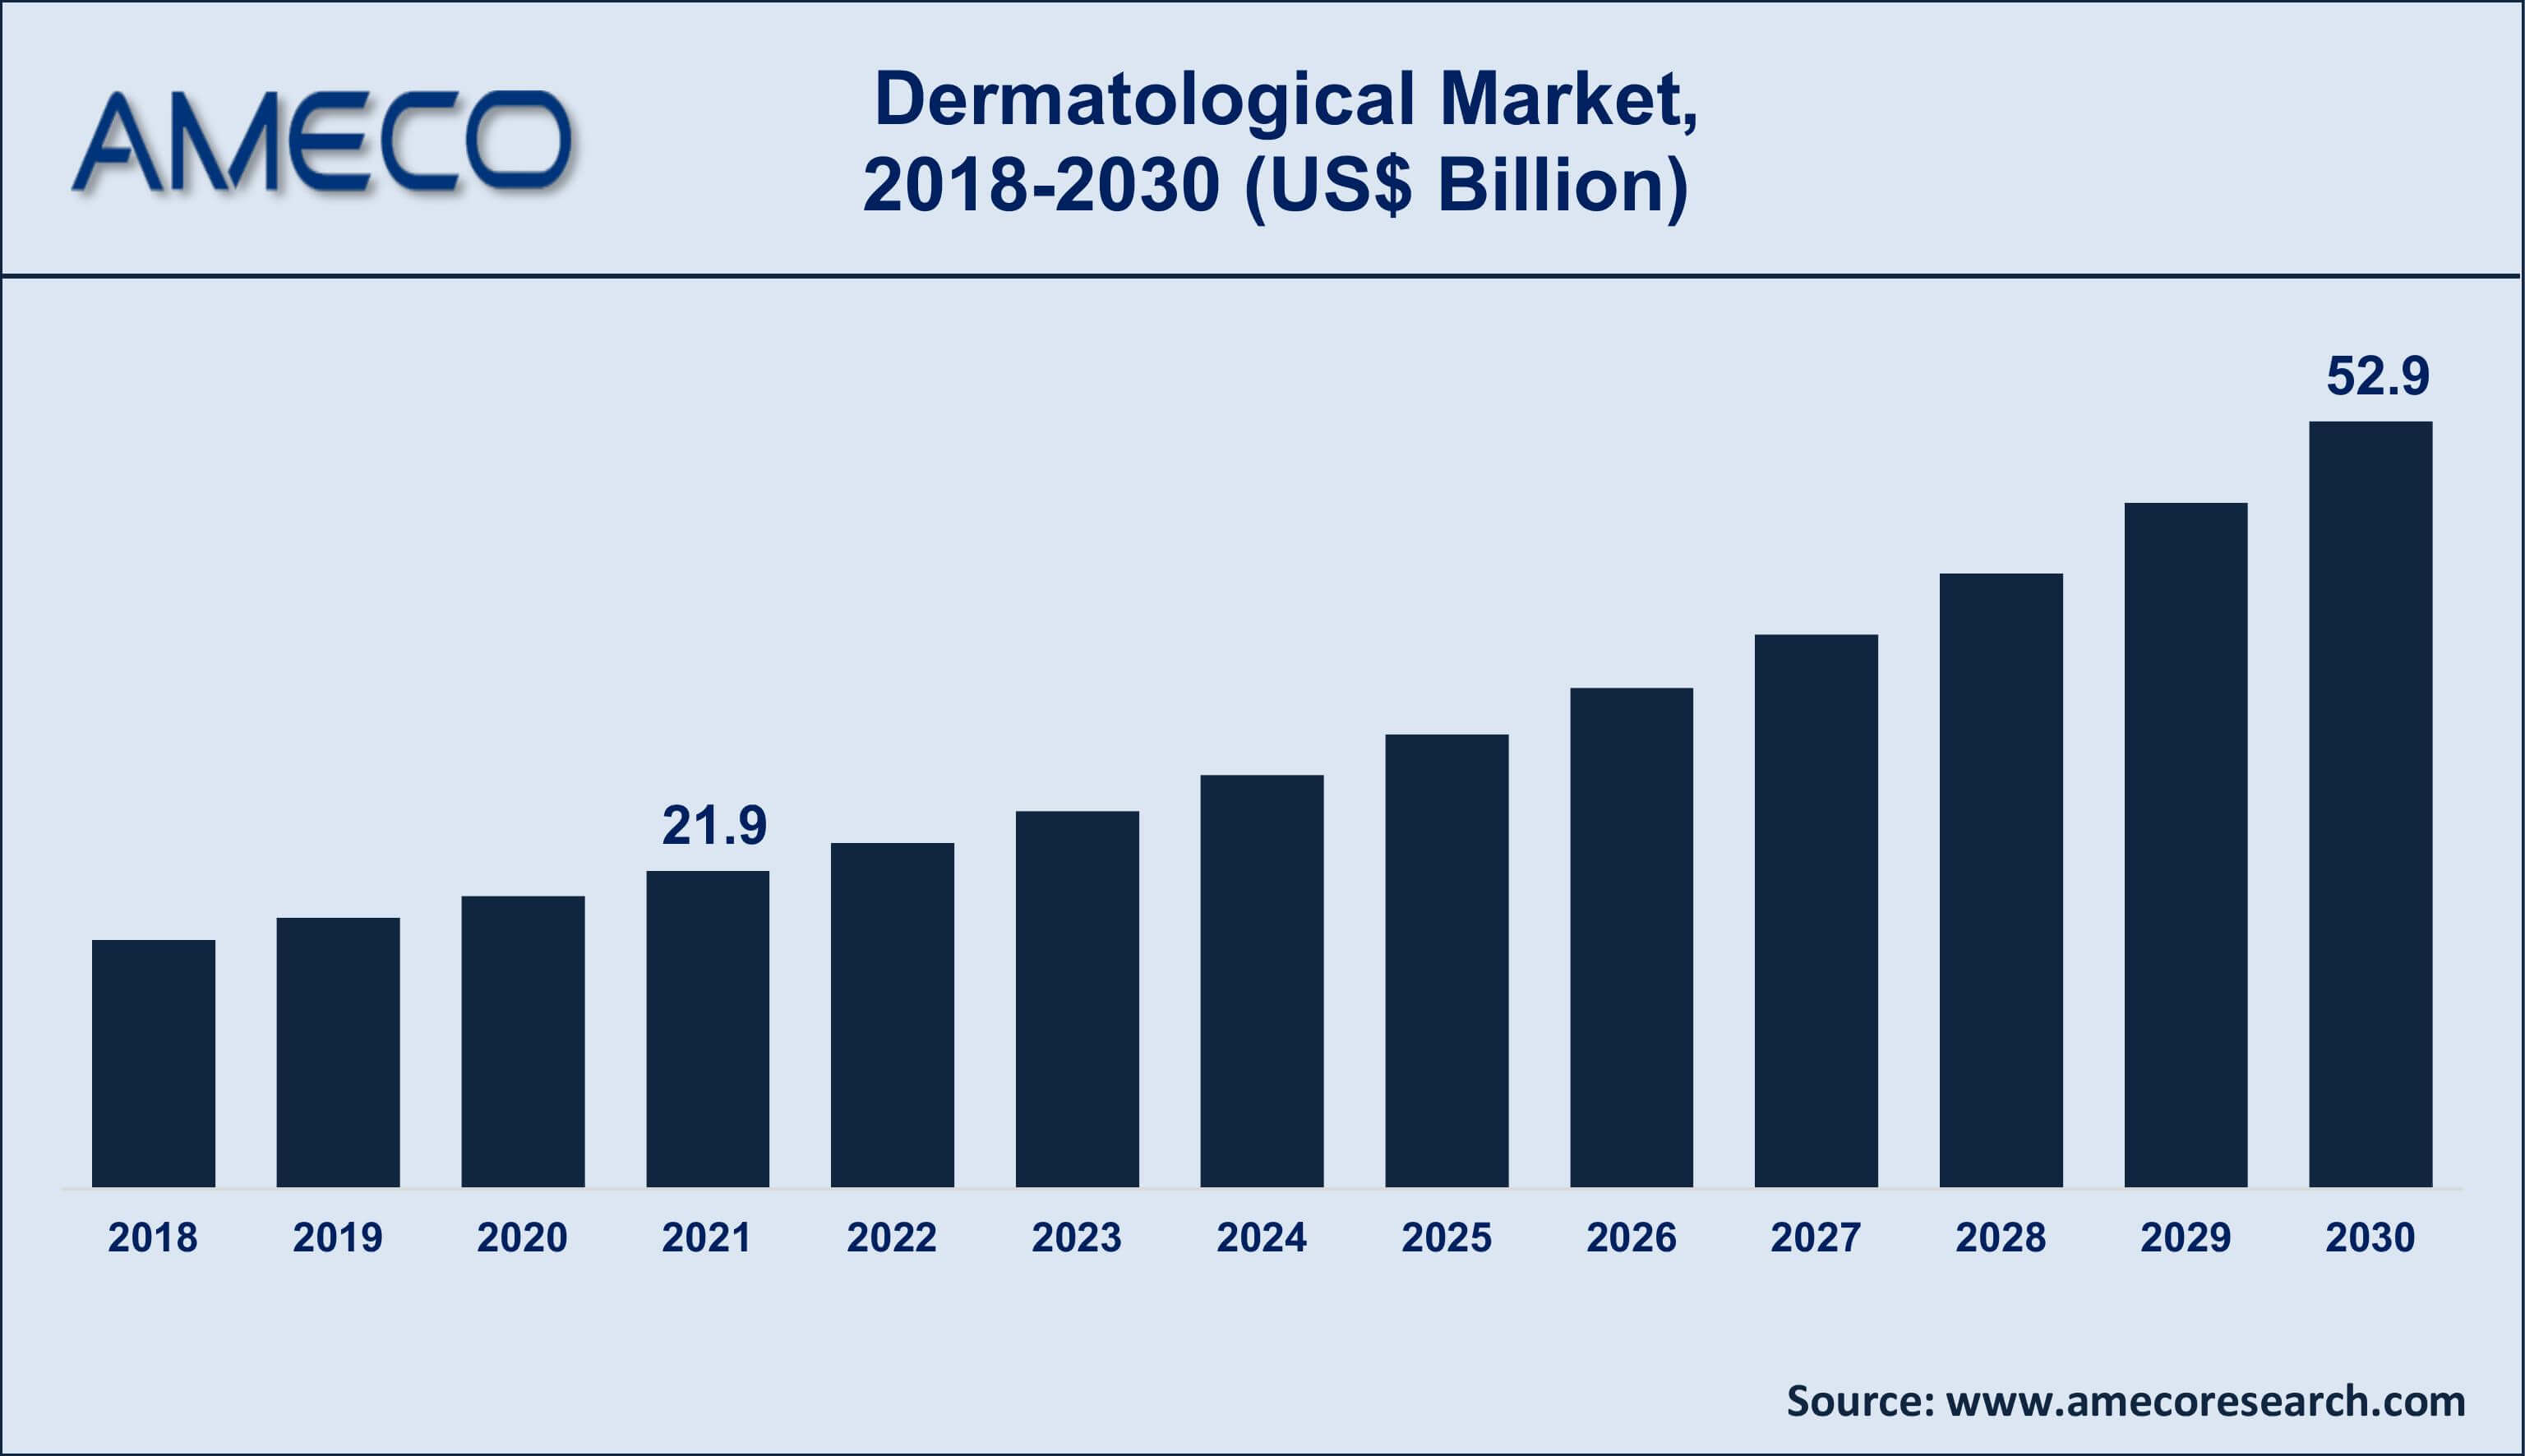 Dermatological Market Growth